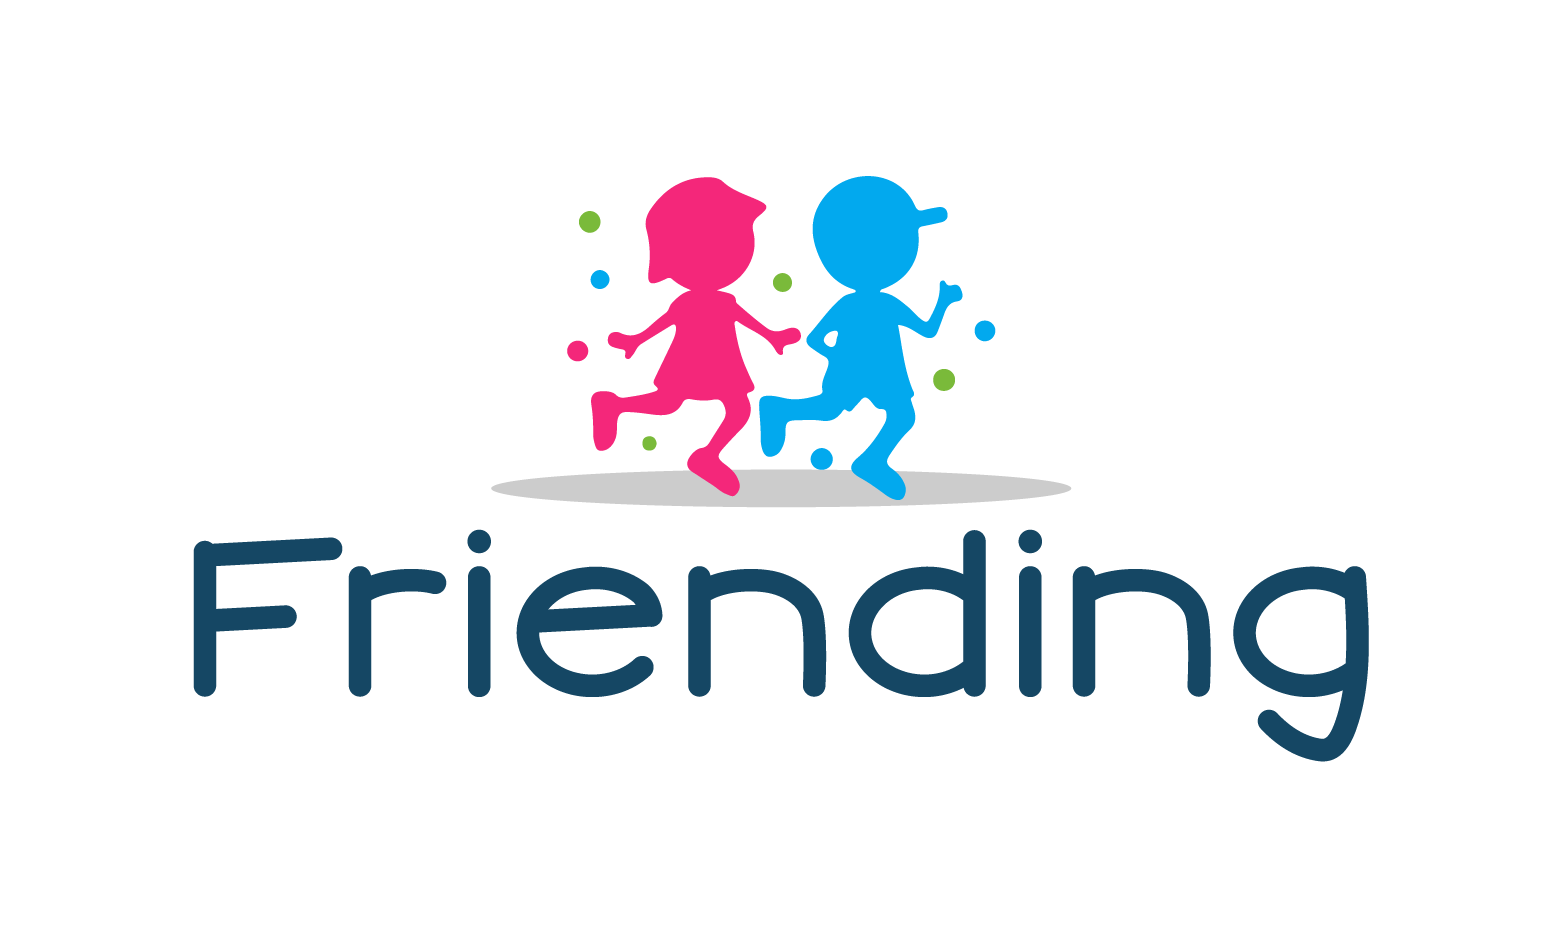 Friending.com - Creative brandable domain for sale